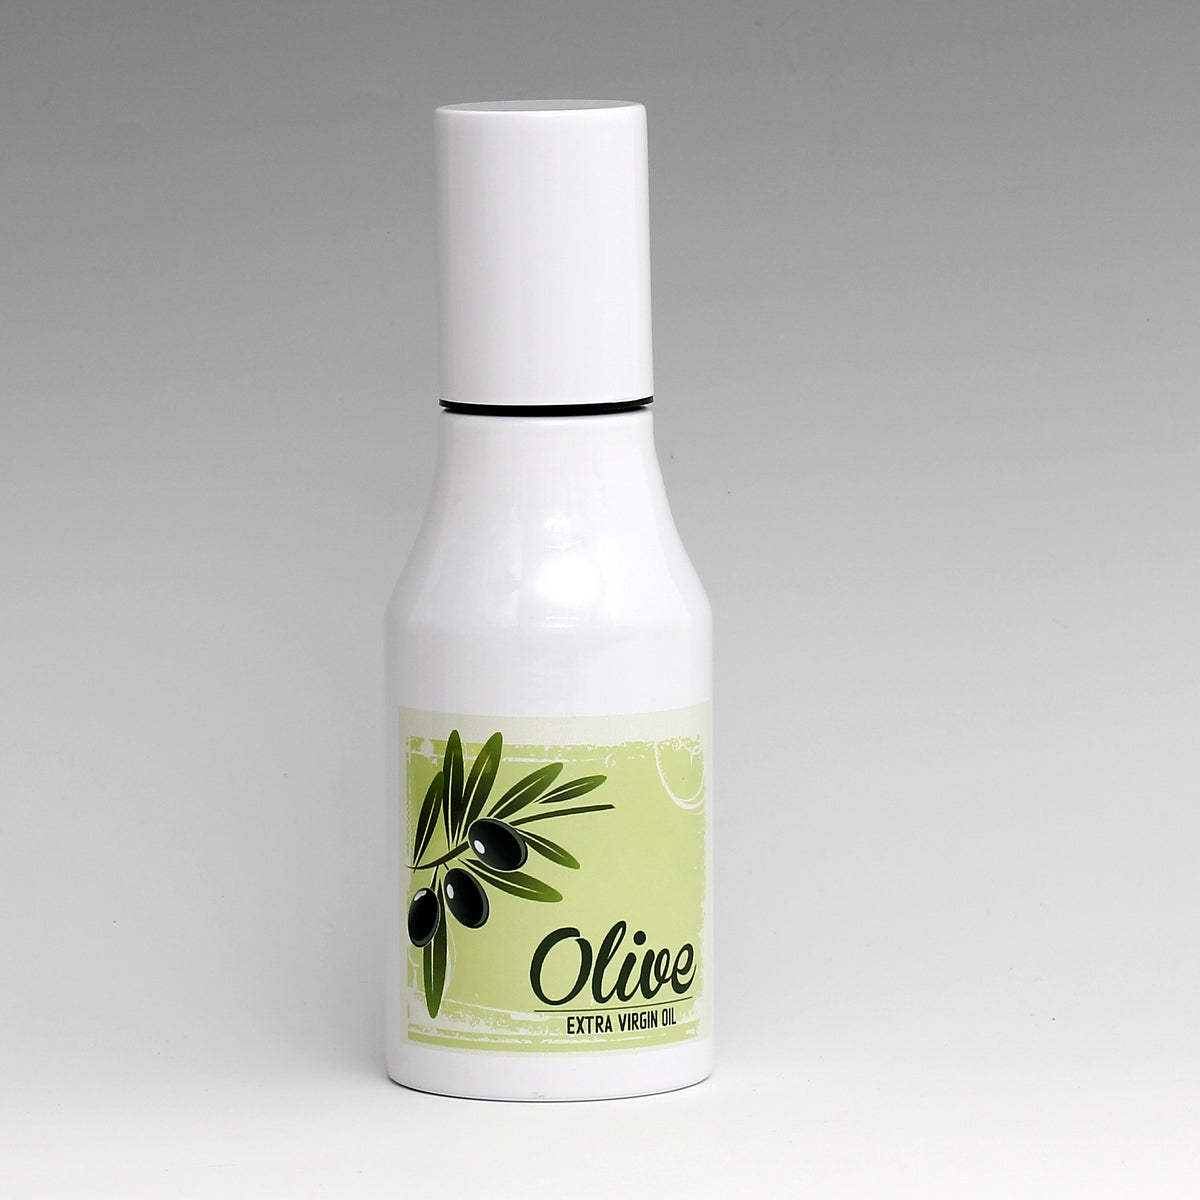 SUBLIMART: Olive Oil Dispenser with non-drip pourer and dust cover cap (Design 17)